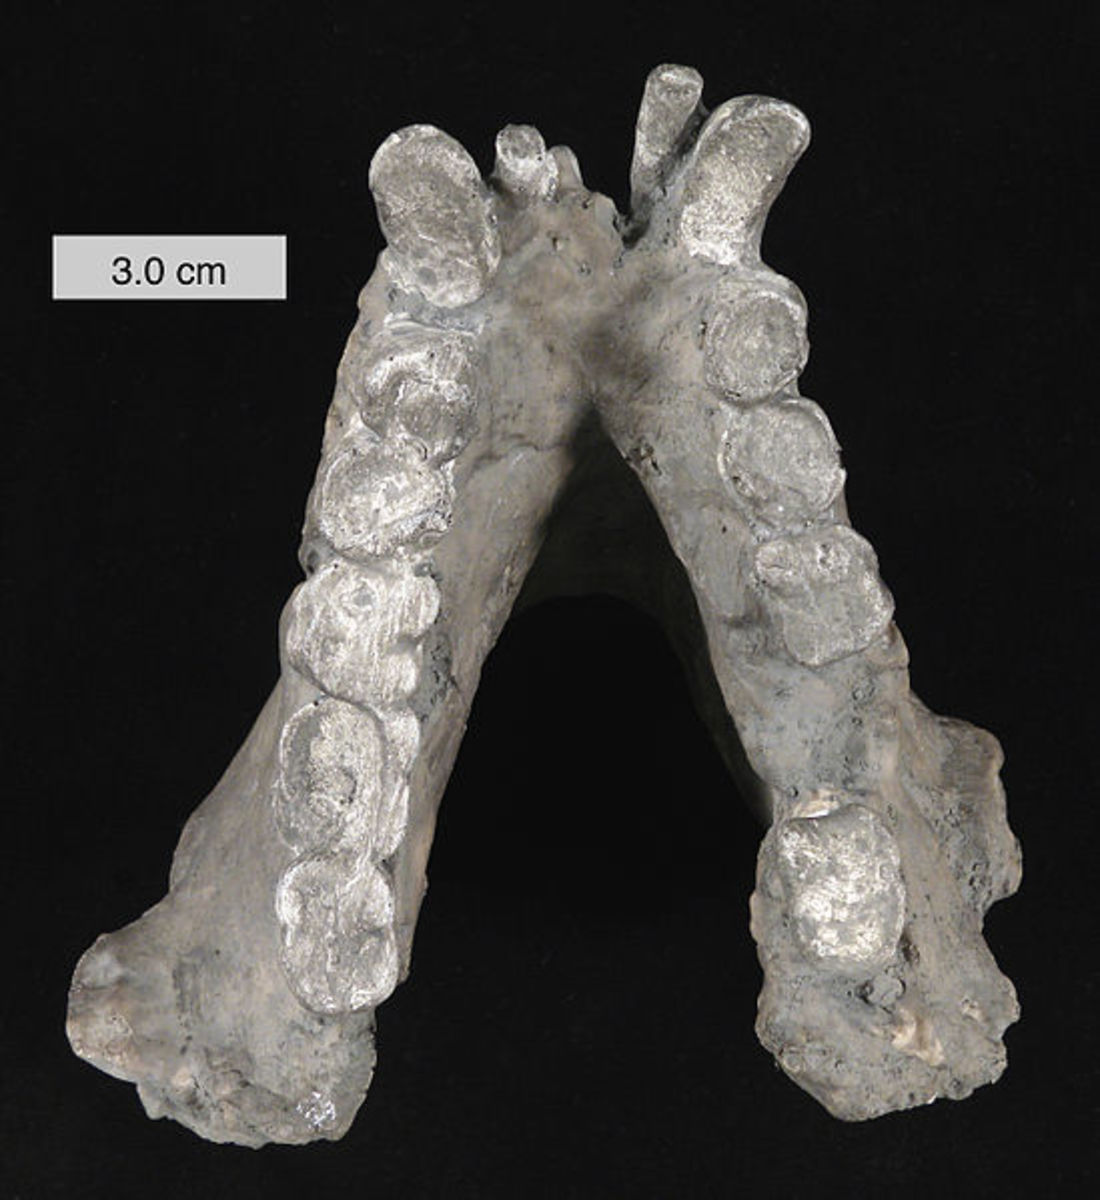 Gigantopithecus Blacki mandible: Evidence of a 10-foot ape.